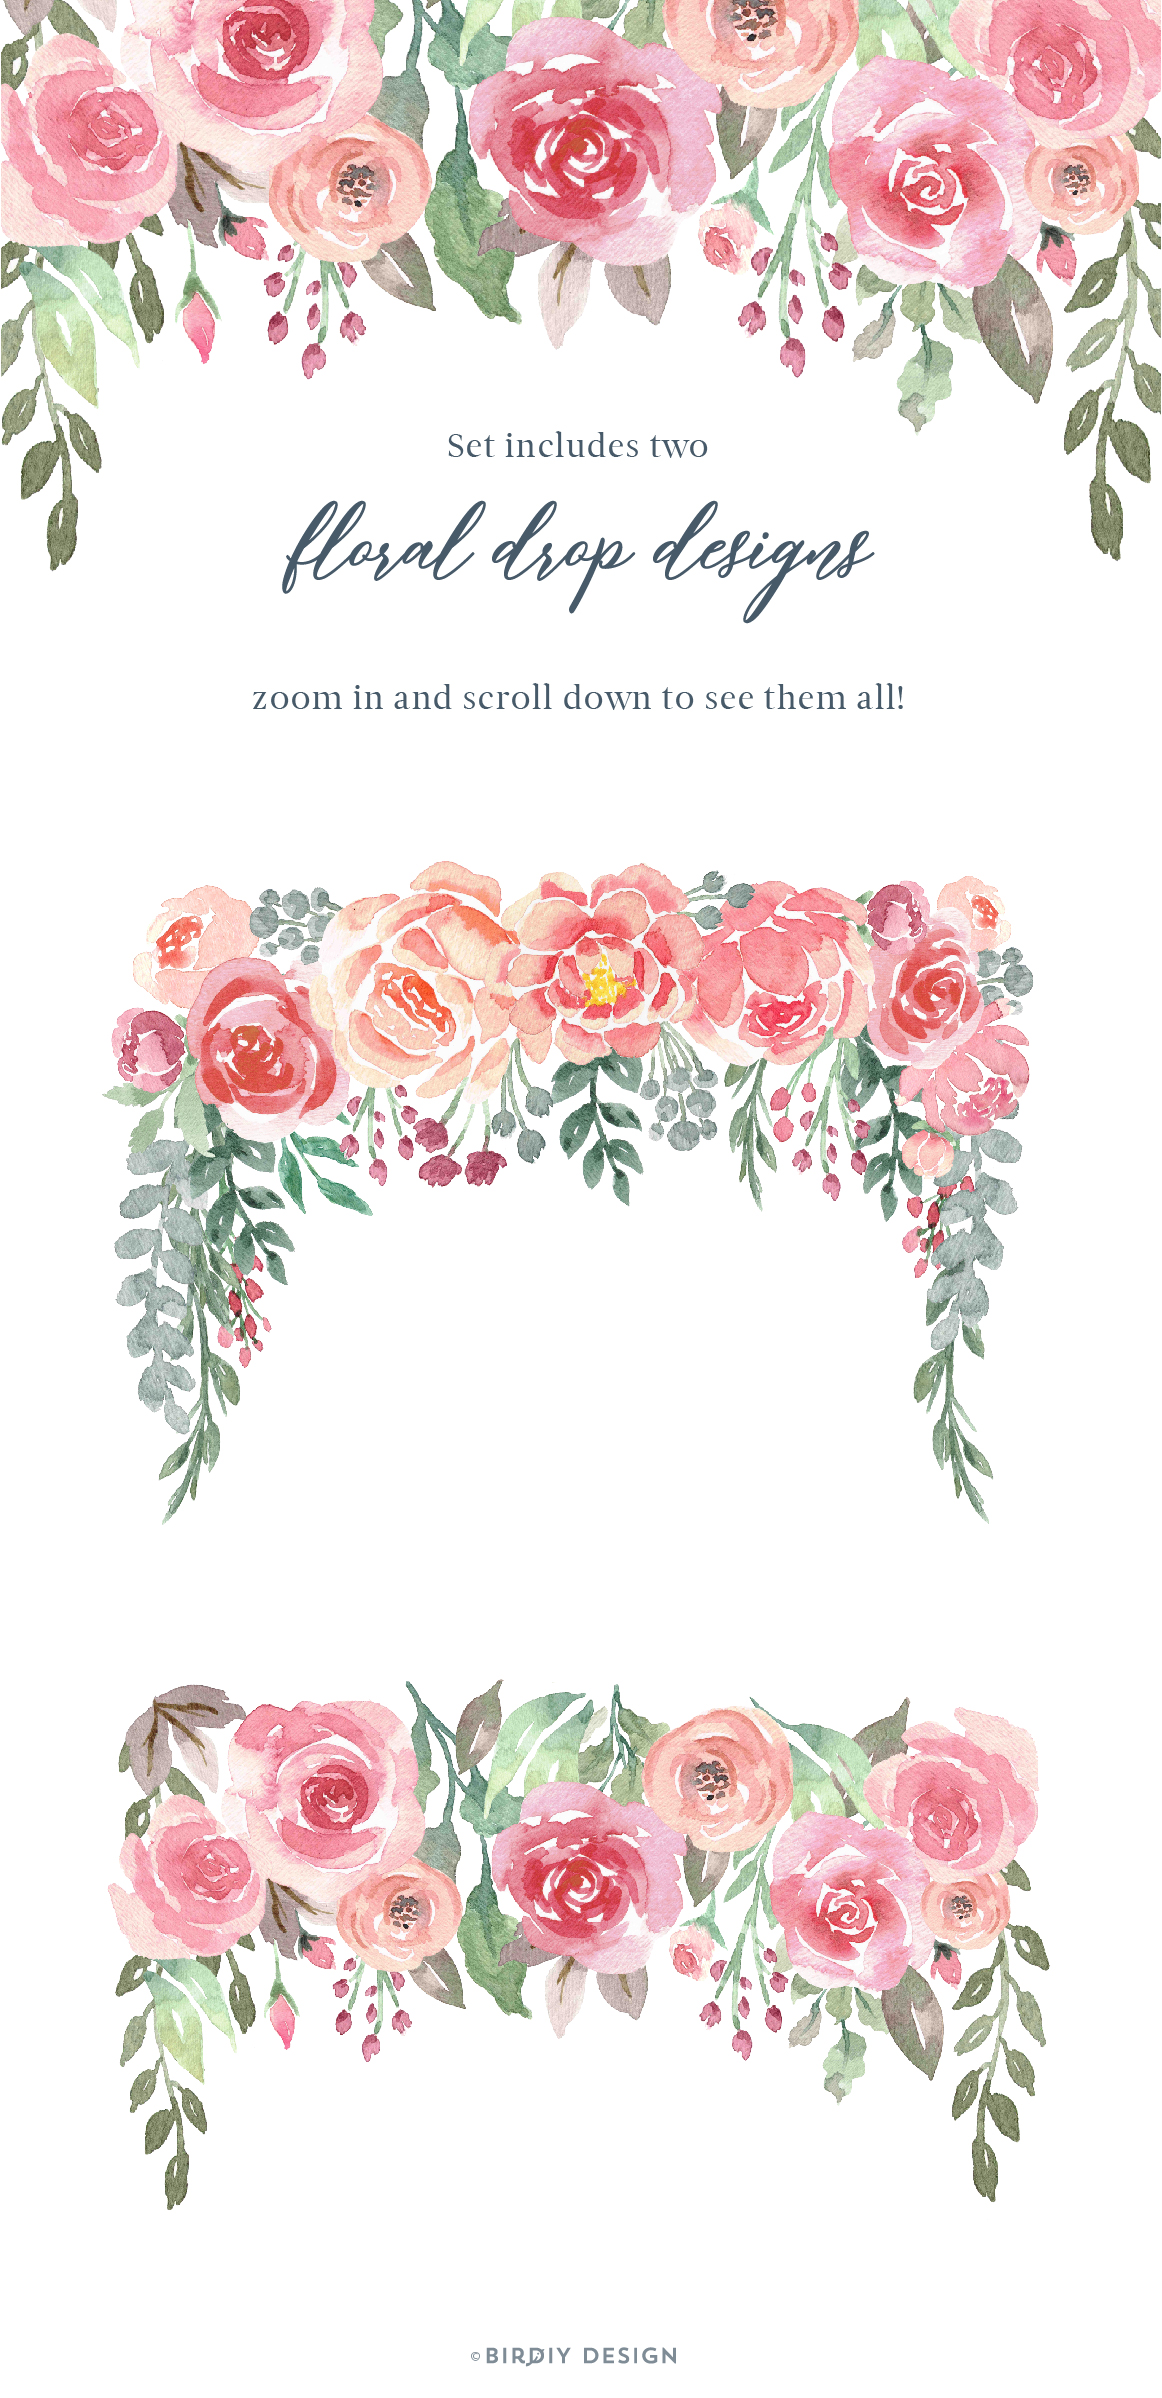 Download Loose Watercolor Roses & Peonies (102280) | Illustrations ...